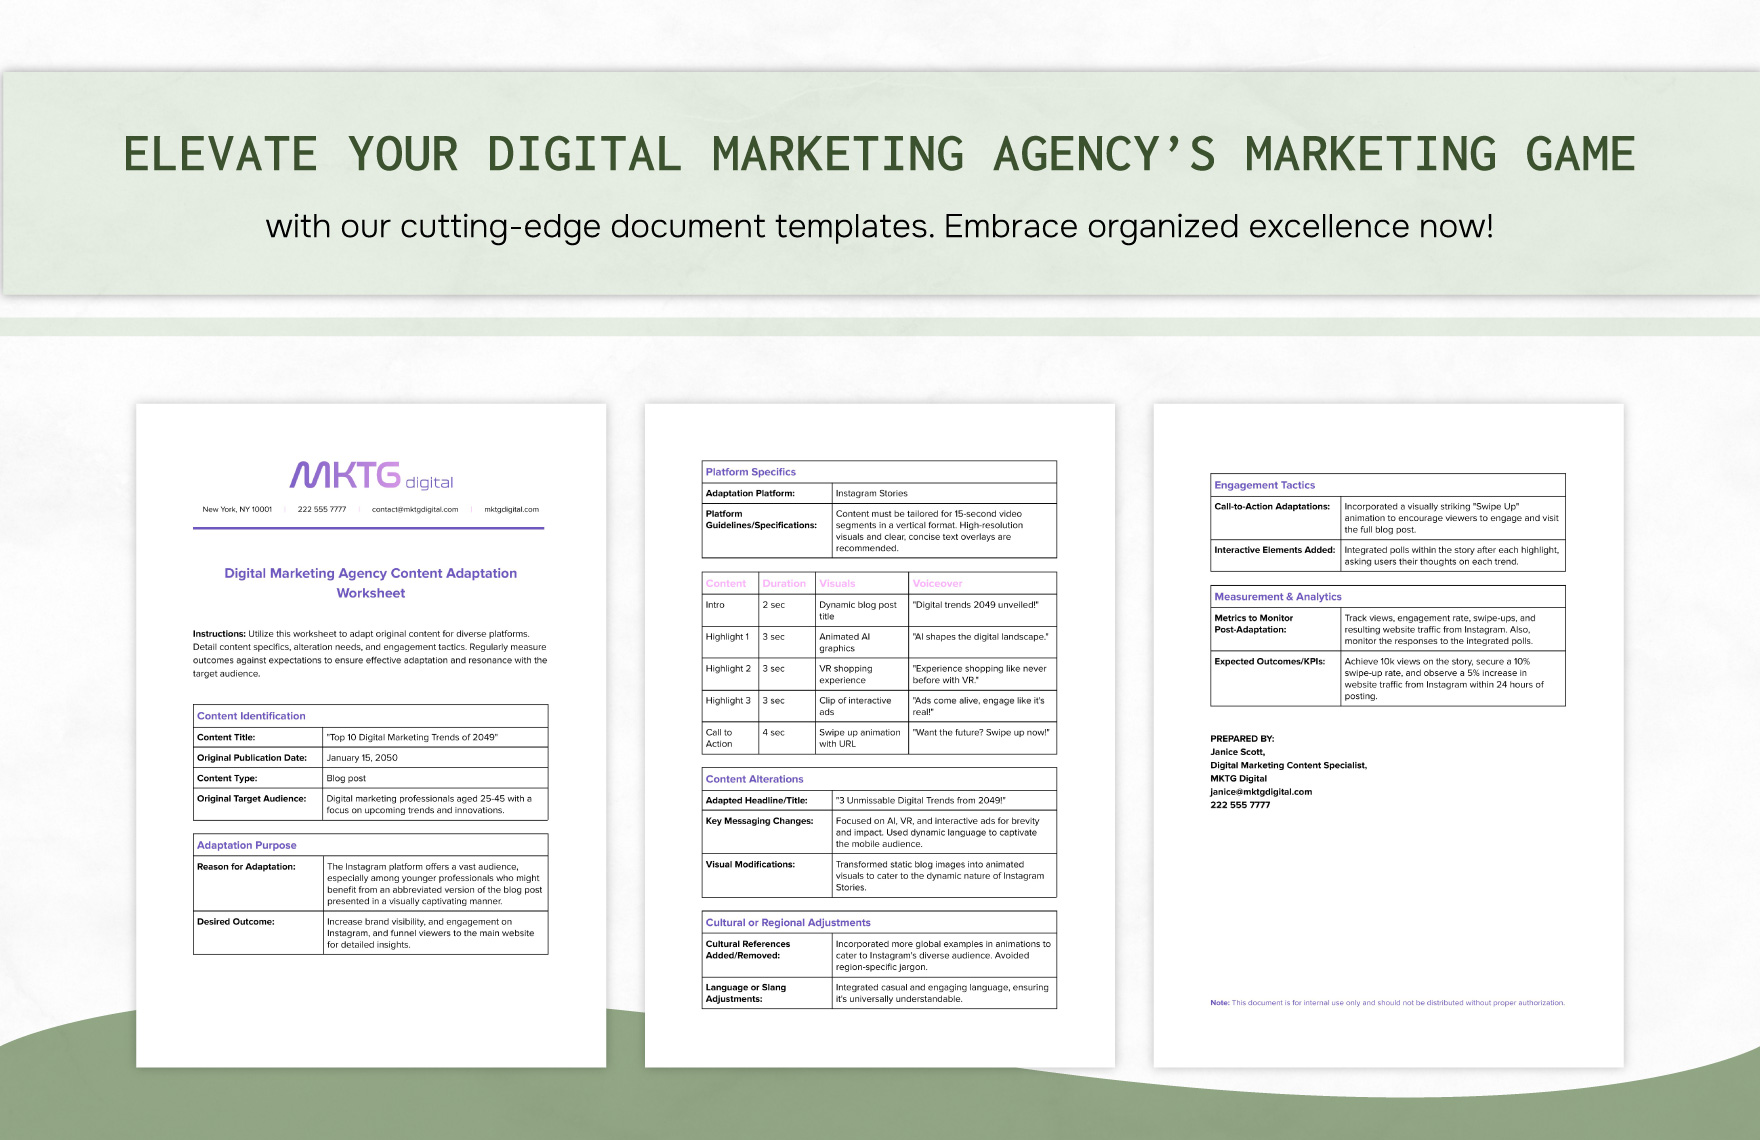 Digital Marketing Agency Content Adaptation Worksheet Template